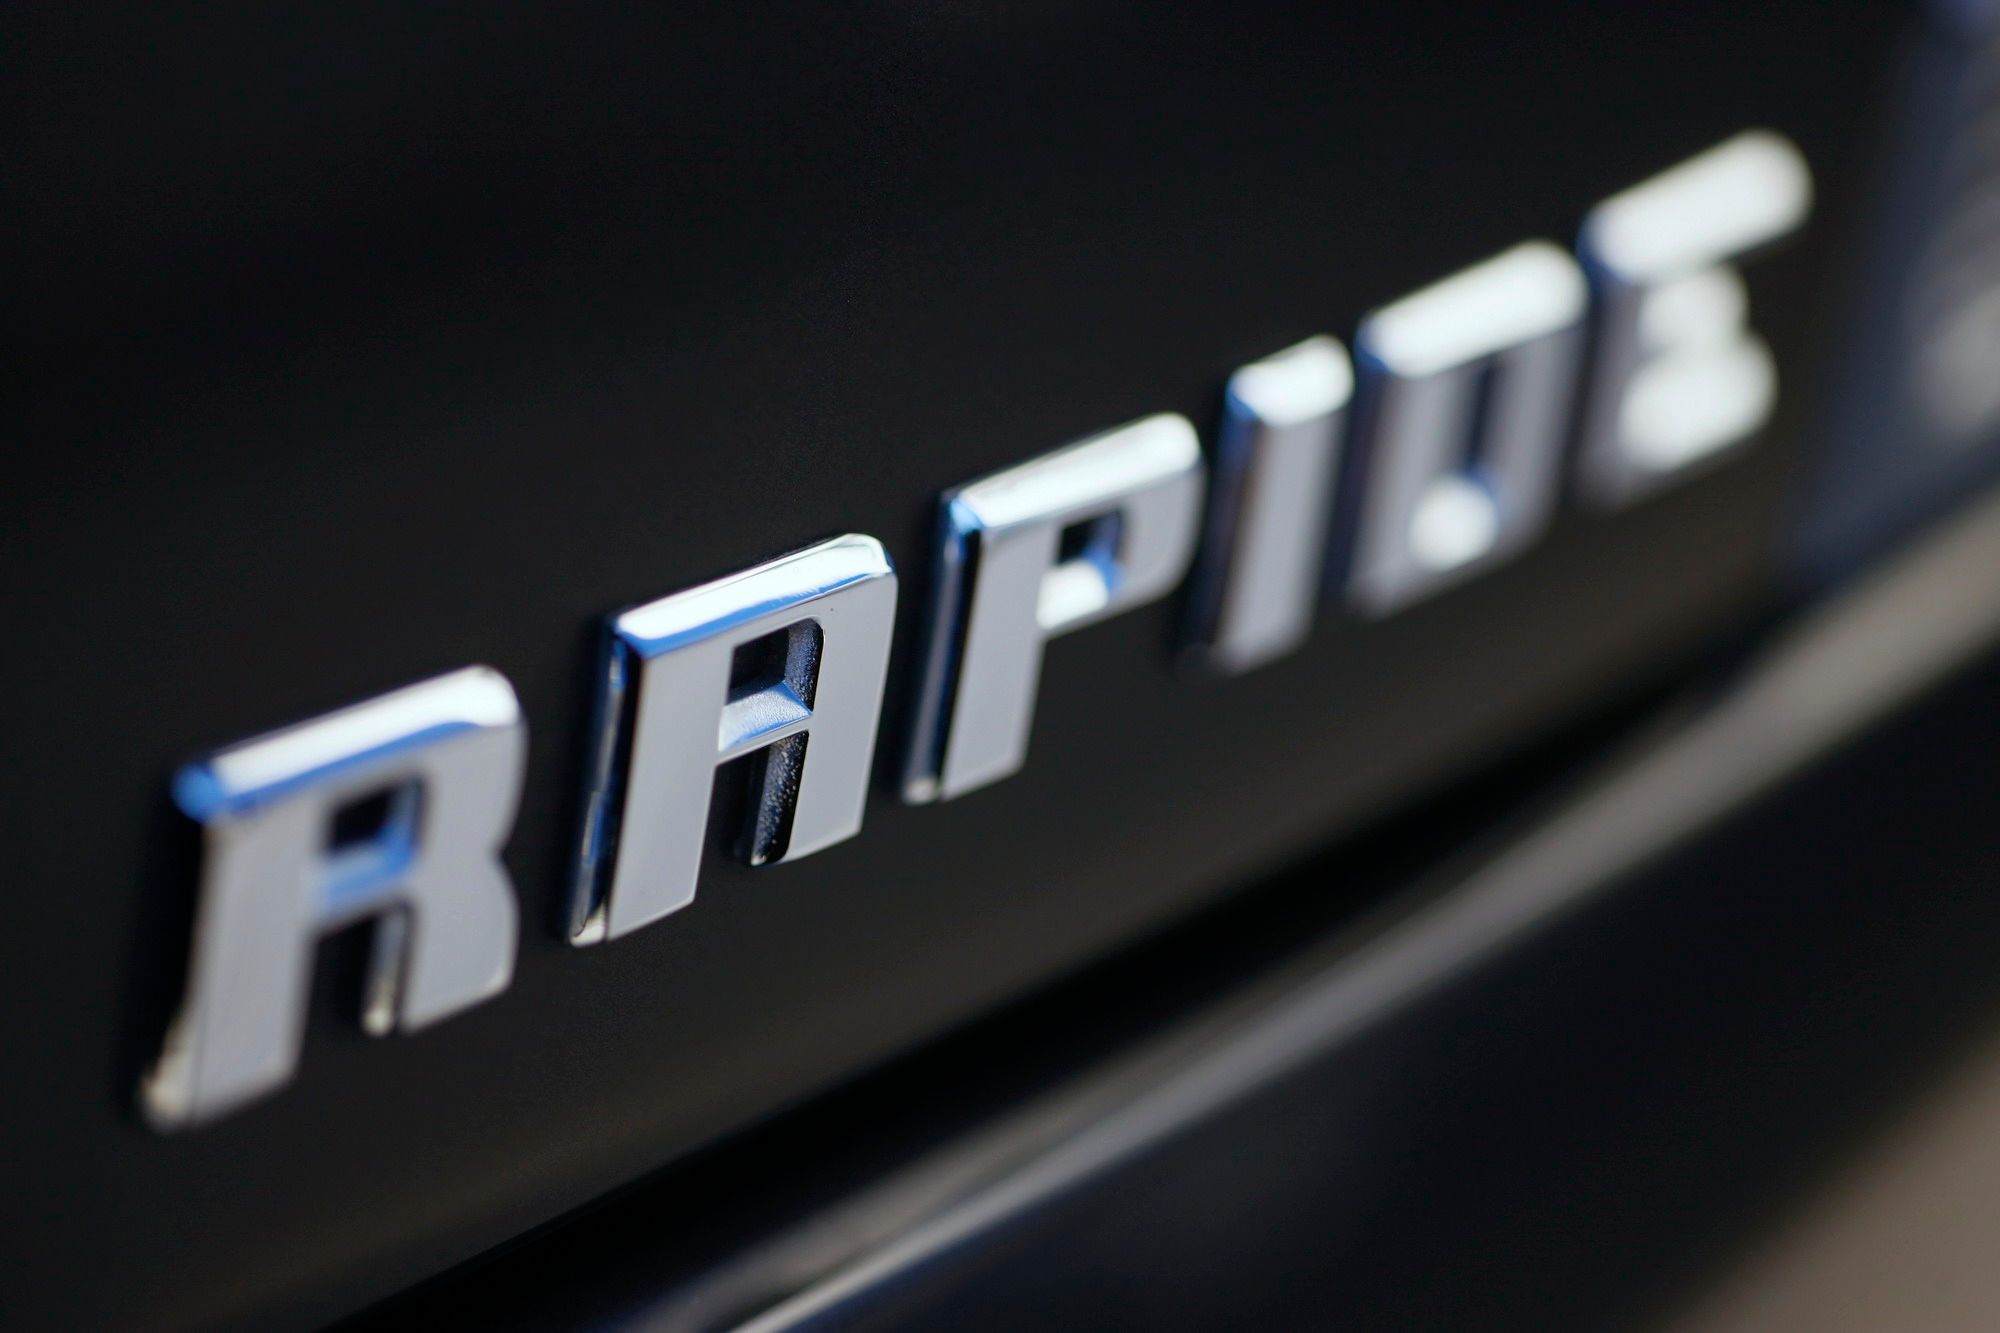 2010 - 2012 Aston Martin Rapide